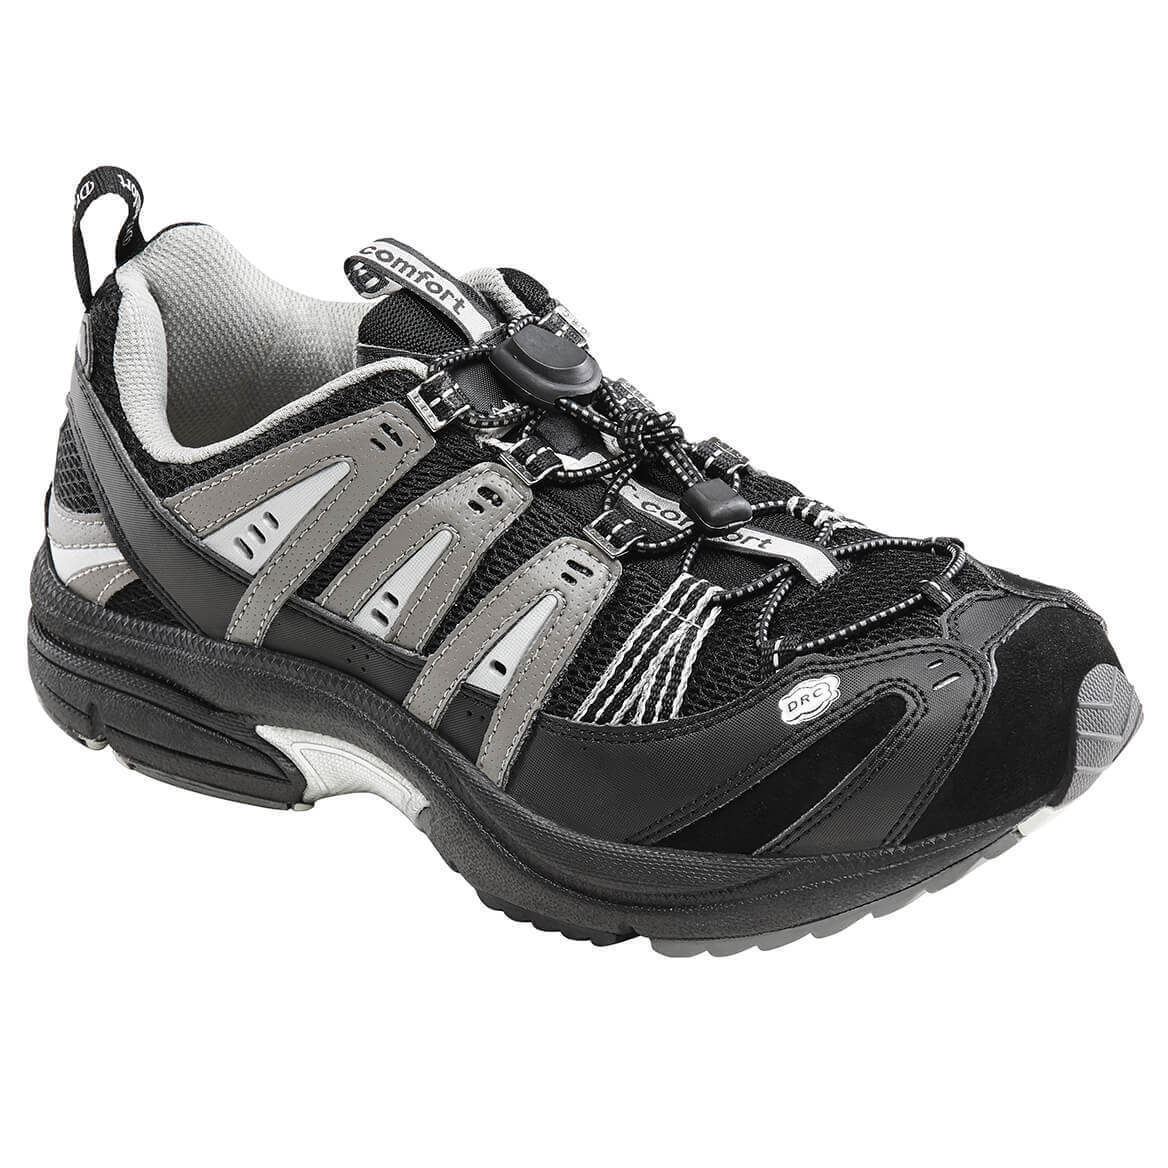 Dr. Comfort Performance Men's Athletic Shoe-6.5W-Black Gray - image 1 of 1